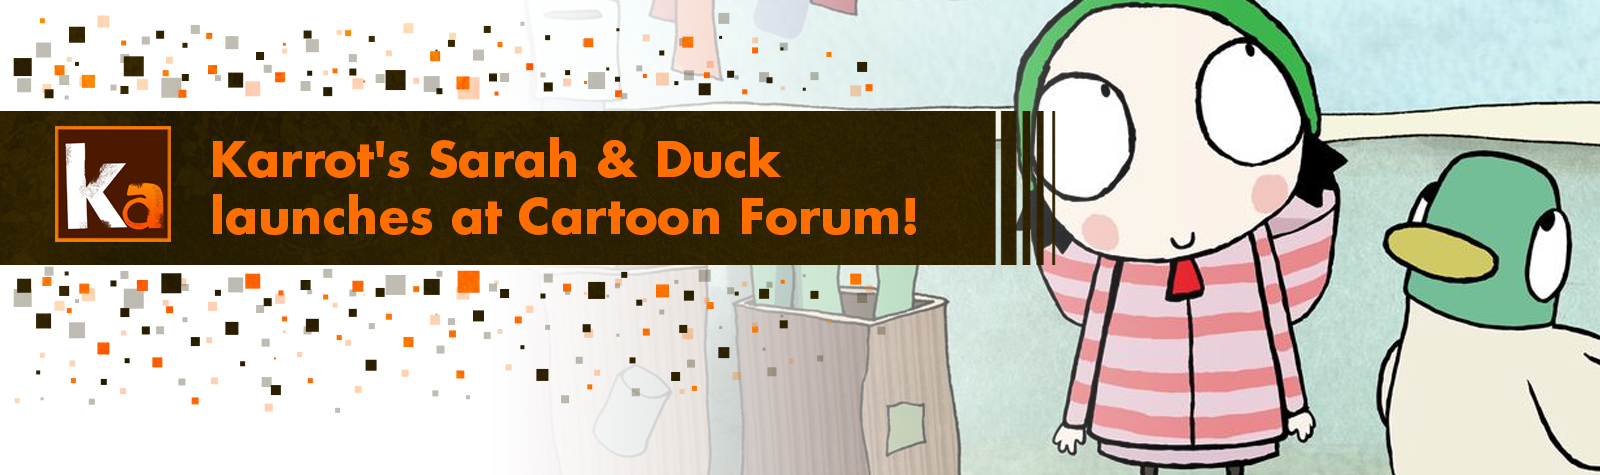 Karrot’s Sarah & Duck launches at Cartoon Forum!